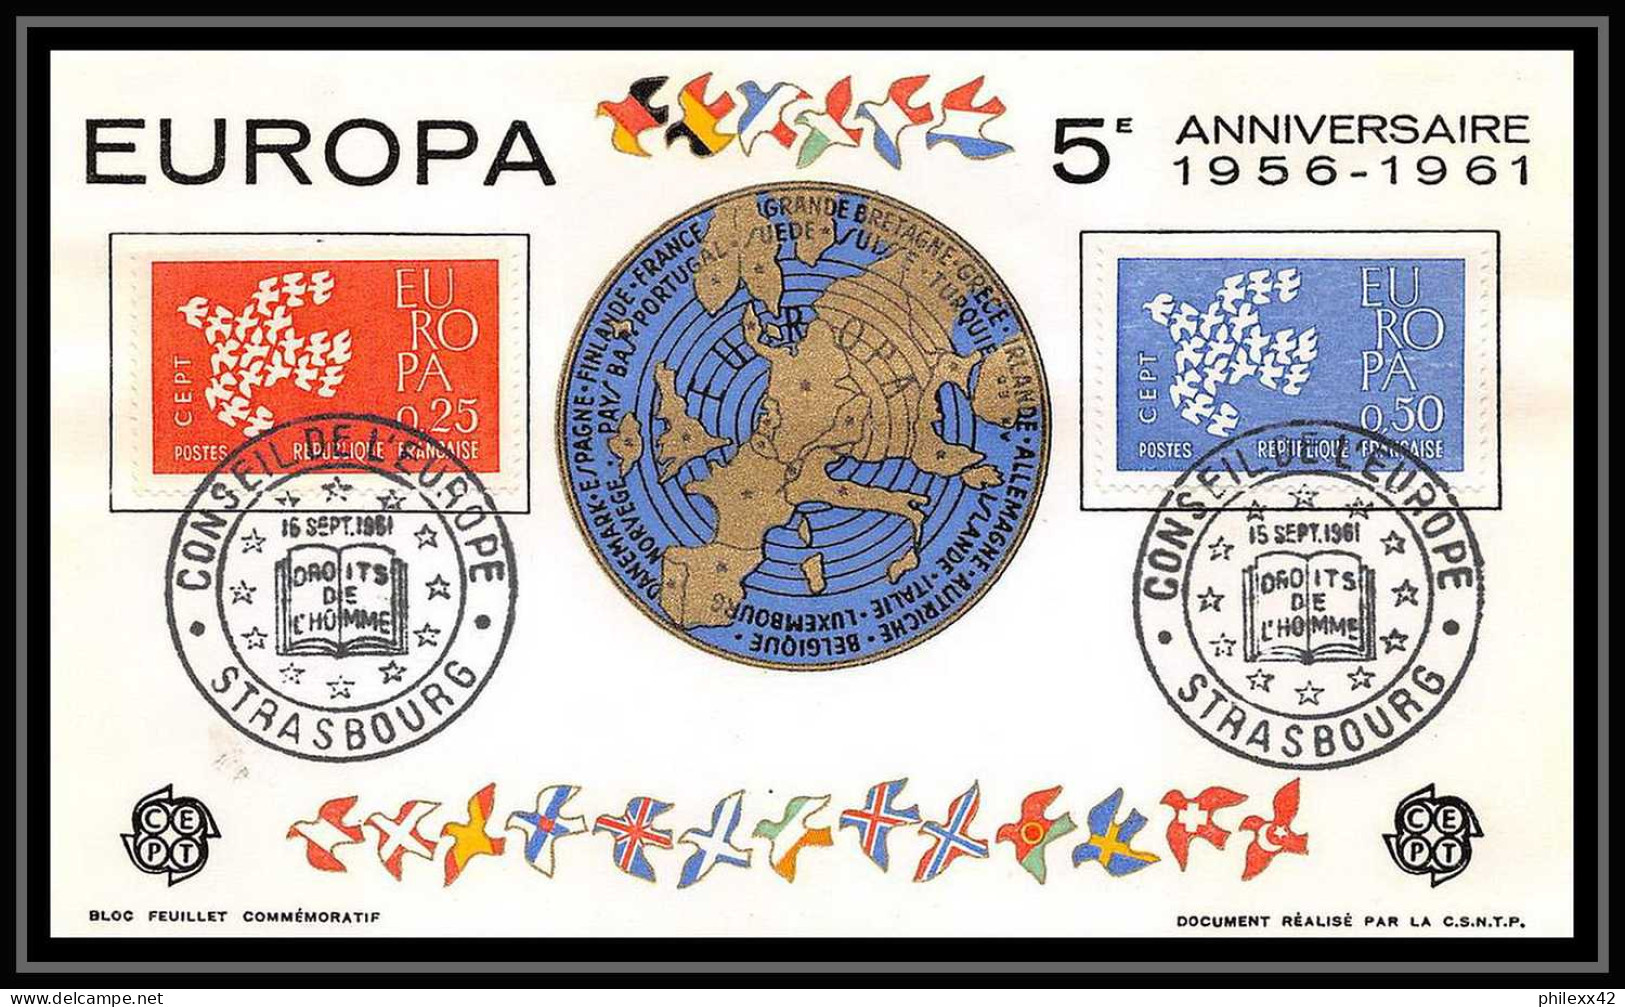 16886 - France Lettre Premier jour (fdc cover) N° 1309 /1310 17 lettres différentes collection rare europa 1961